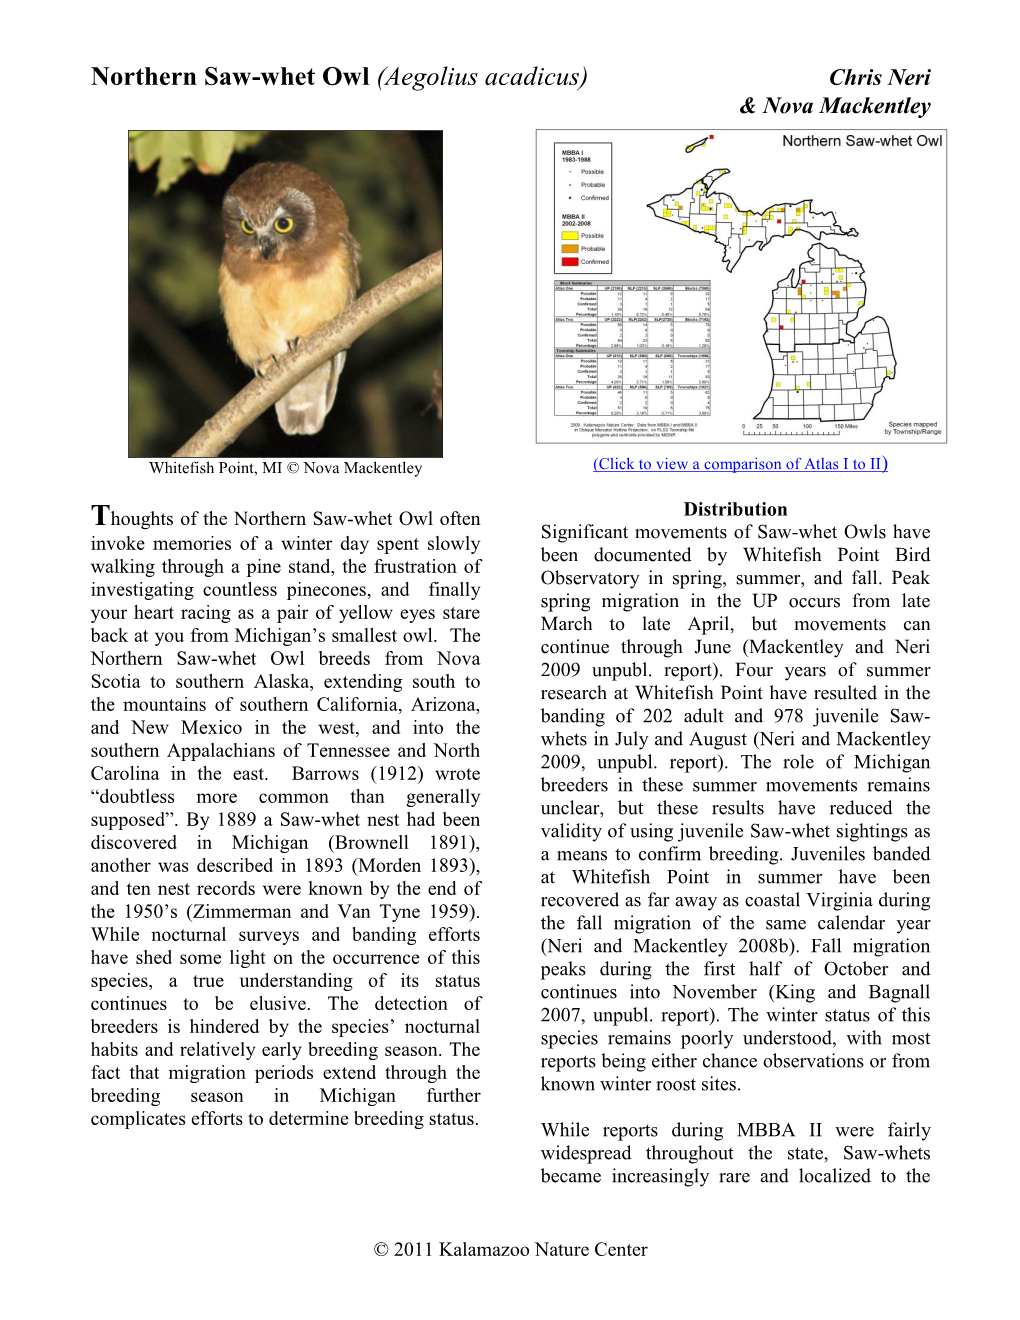 Northern Saw-Whet Owl (Aegolius Acadicus) Chris Neri & Nova Mackentley